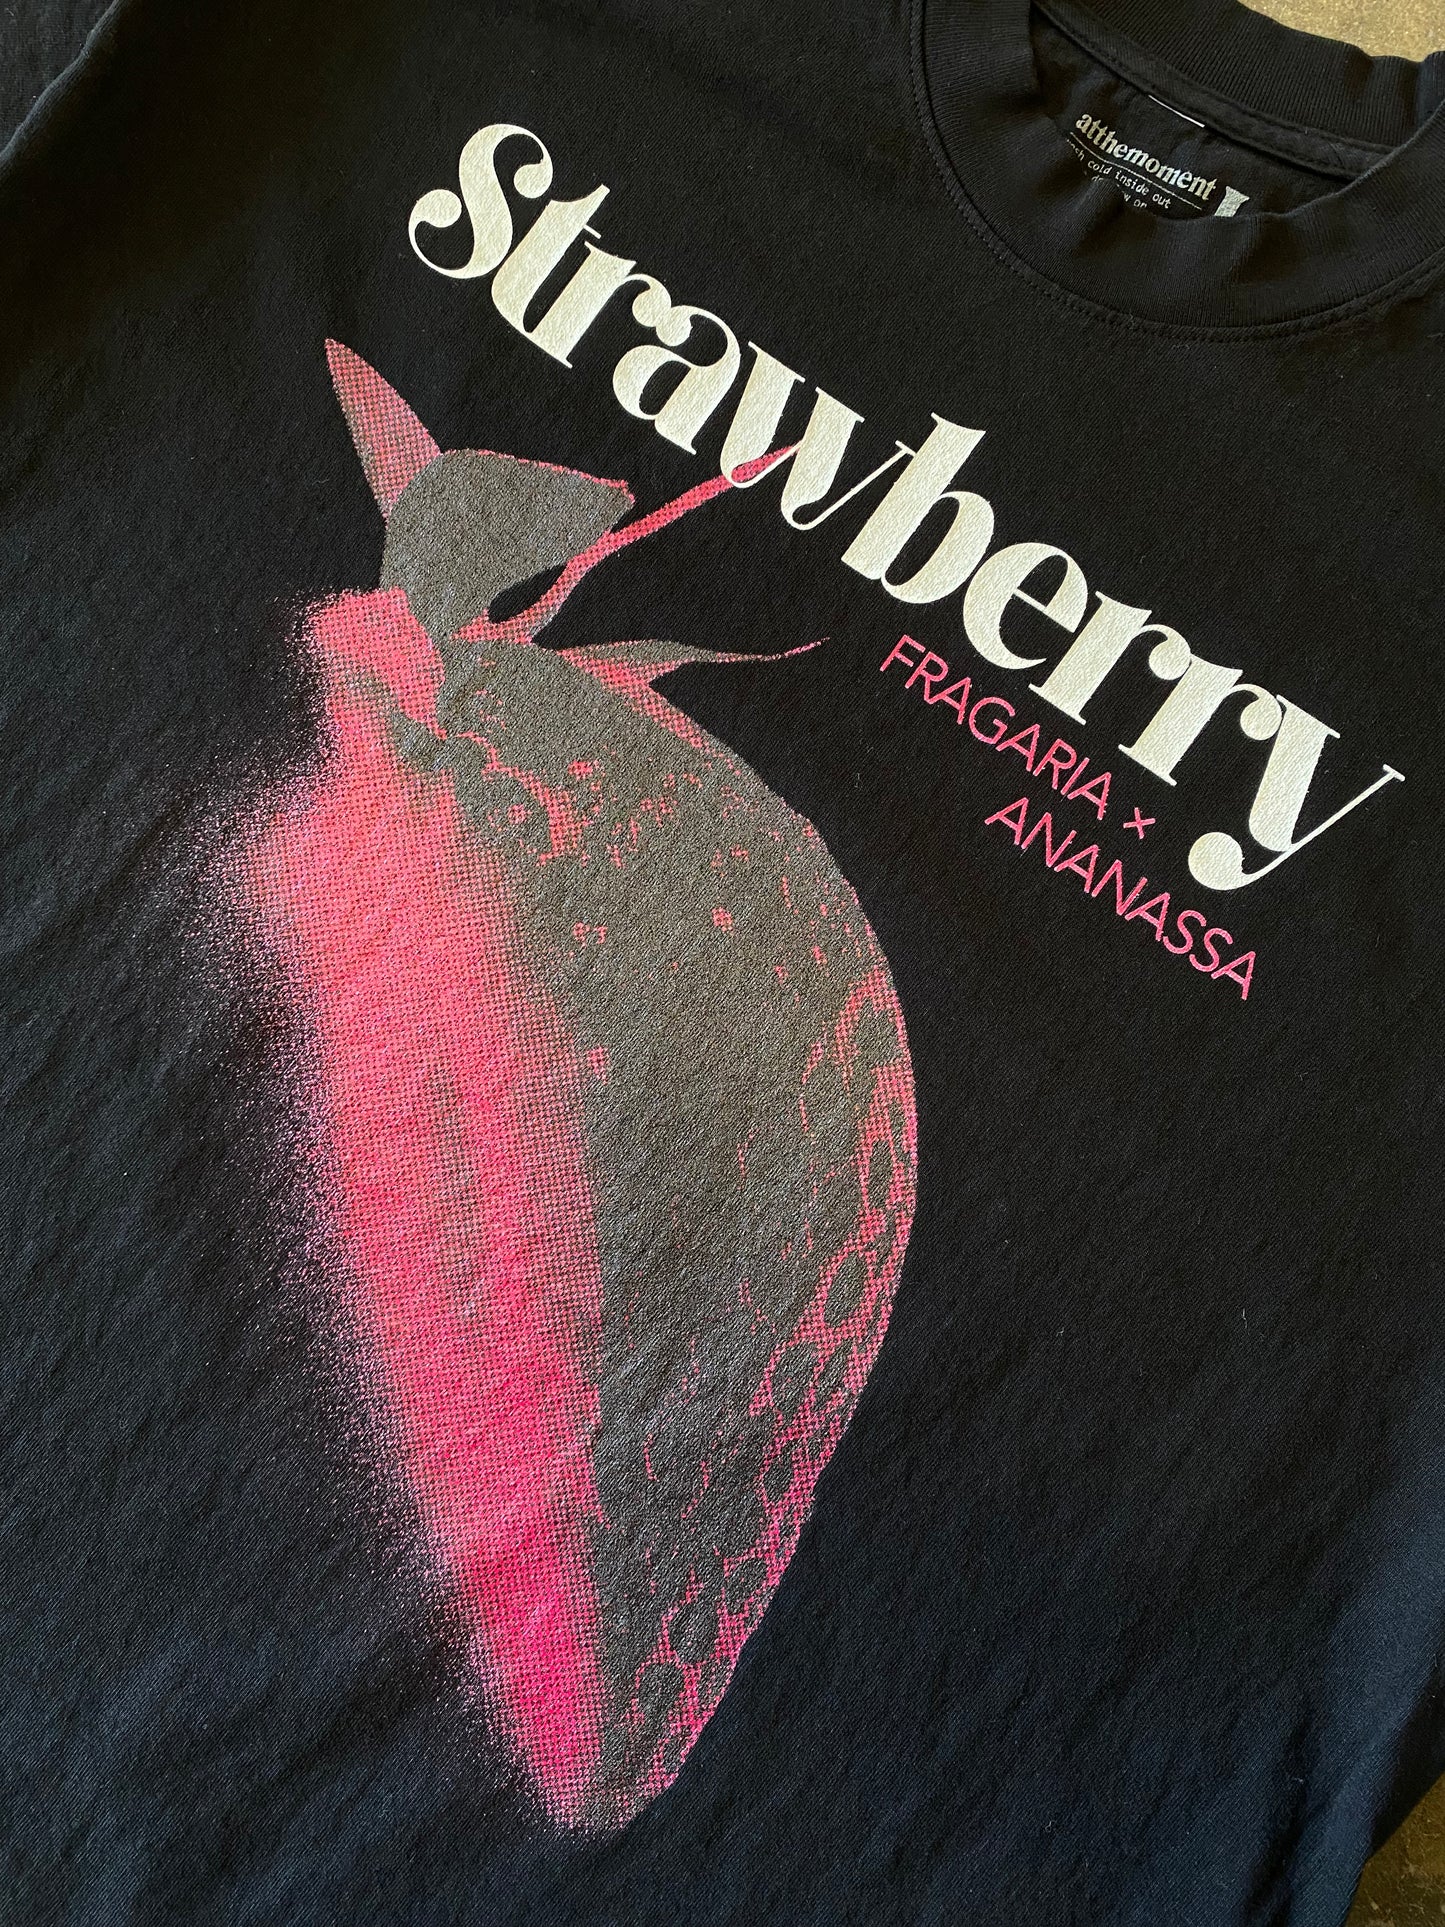 T-shirt demi-fraise